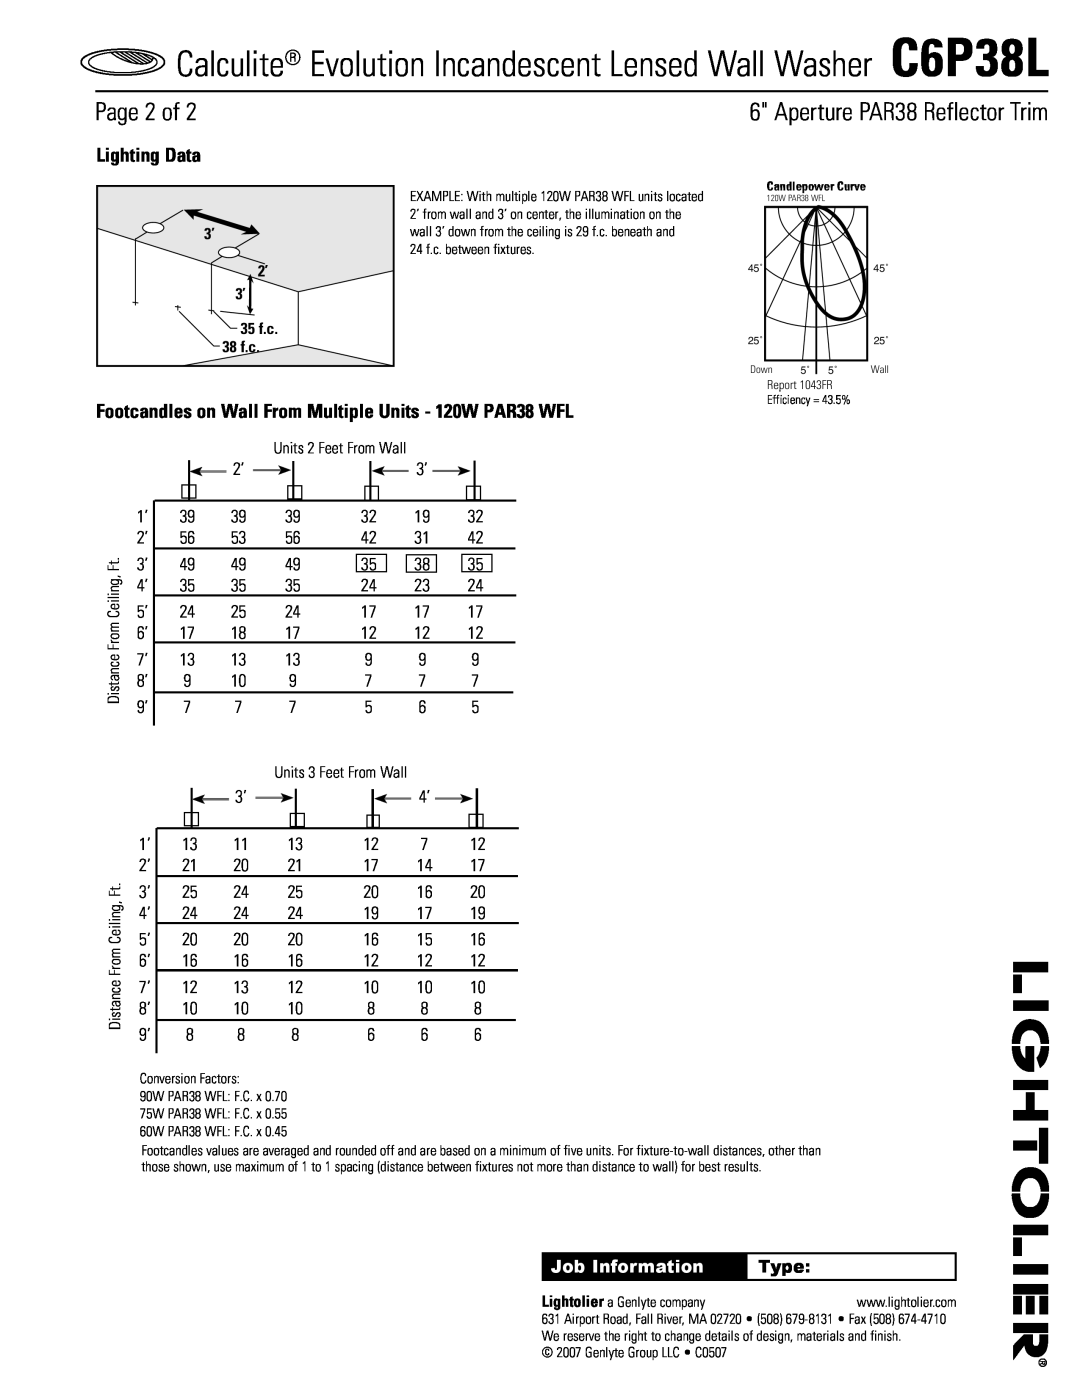 Lightolier C6P38L specifications Lighting Data, Page of, Aperture PAR38 Reflector Trim, Job Information, Type 